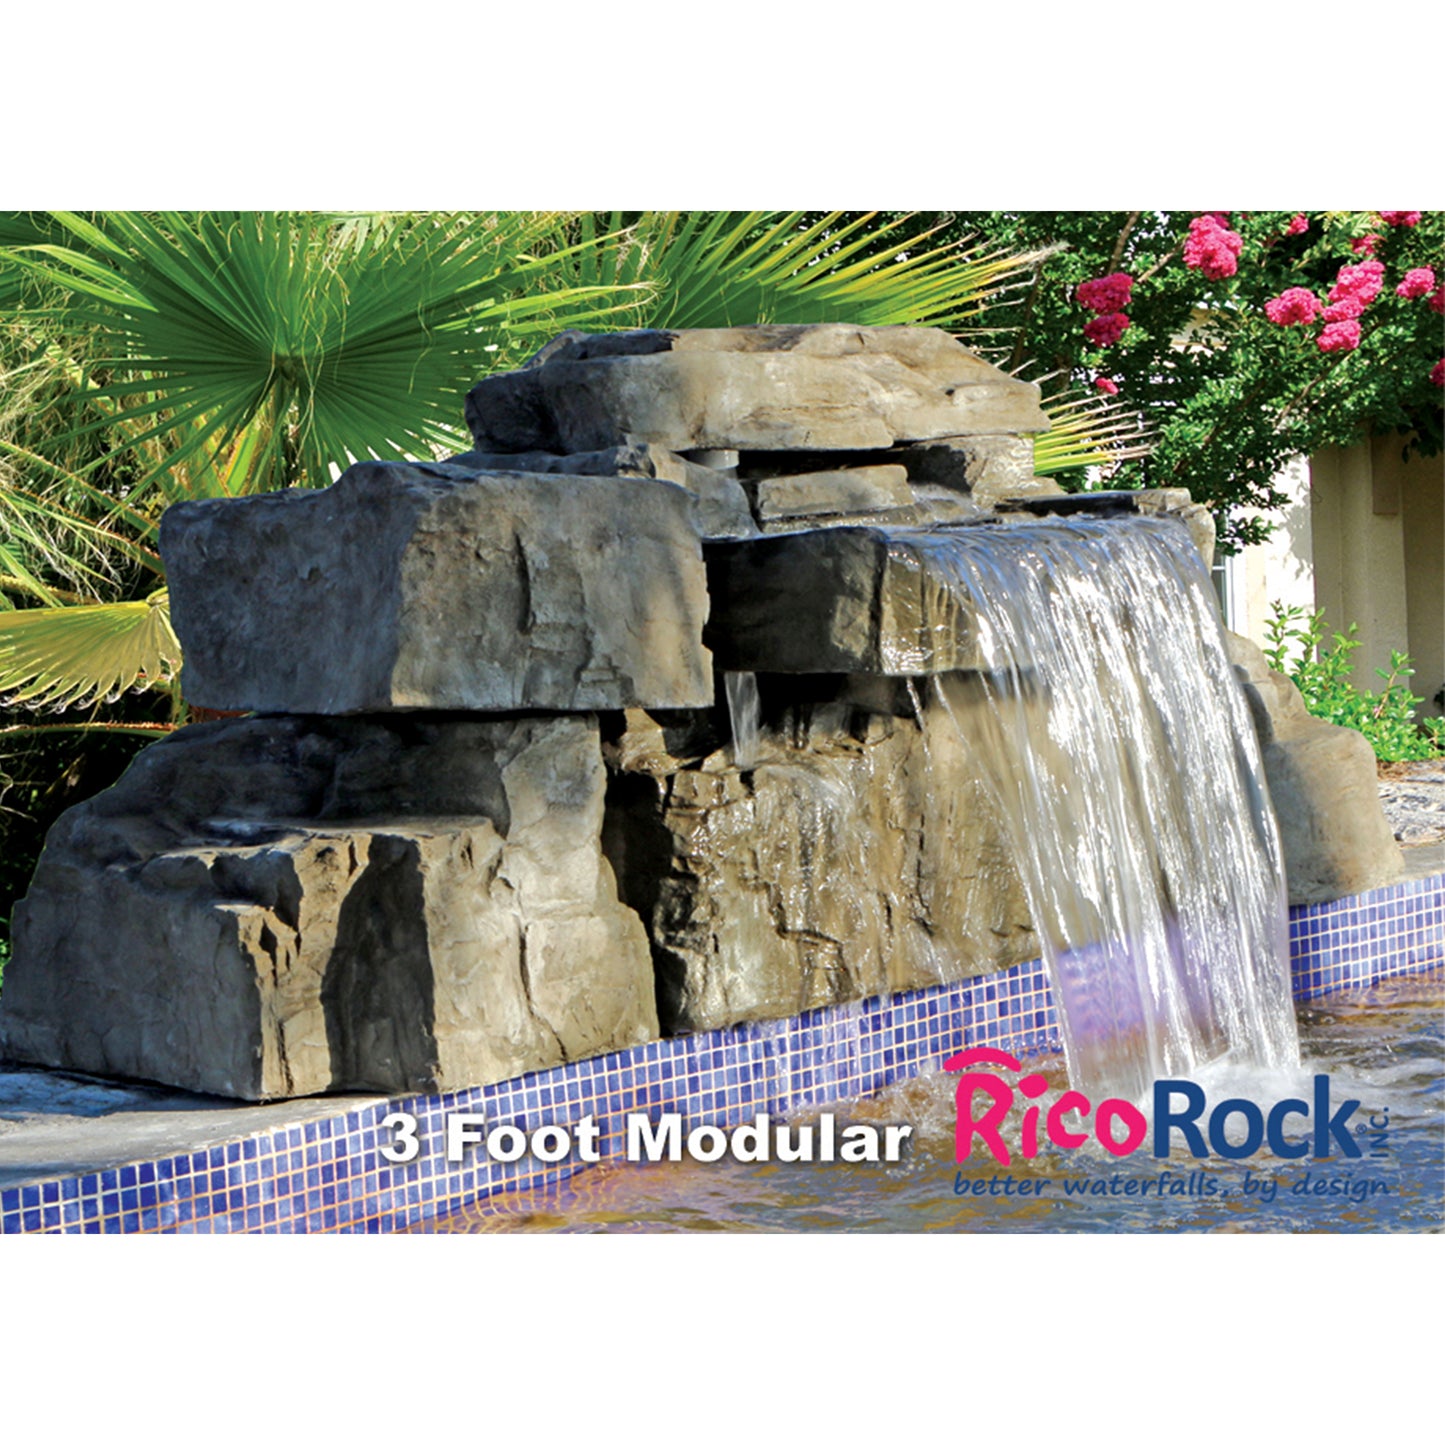 Rico Rock® 3 Foot Modular Swimming Pool Waterfall Kit